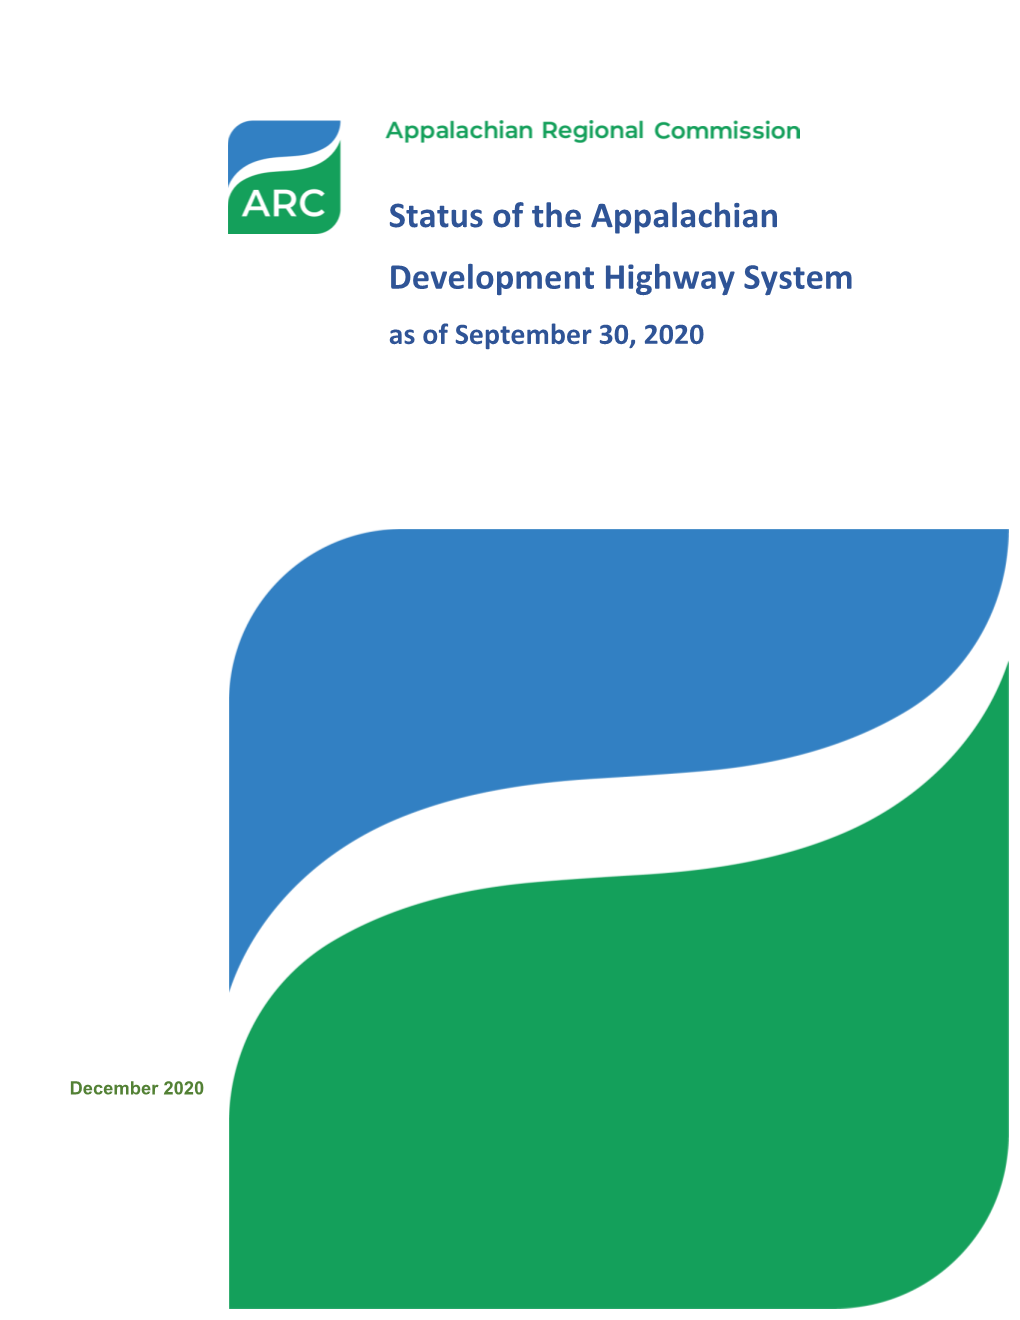 FY 2020 Status of the Appalachian Development Highway System